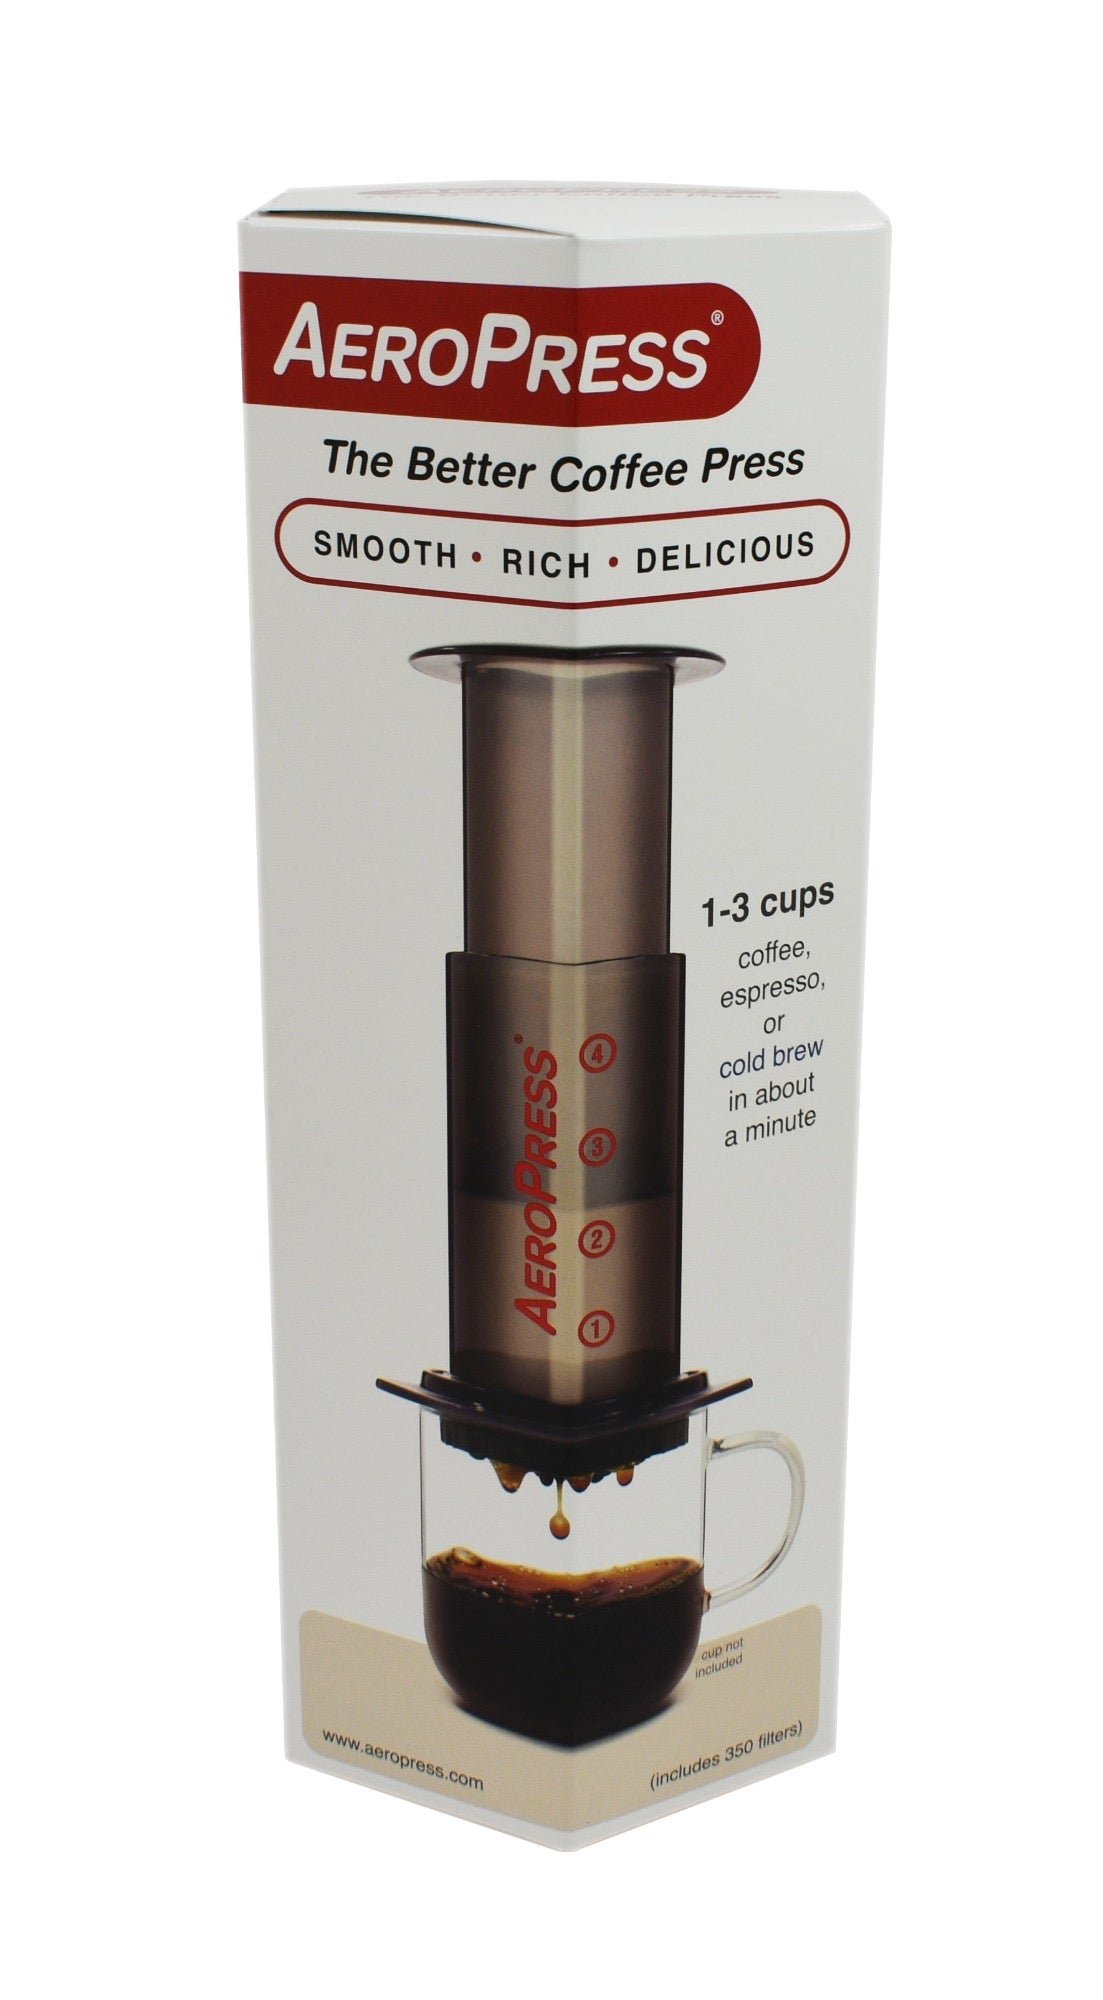 7 Coffee Maker by Aeropress